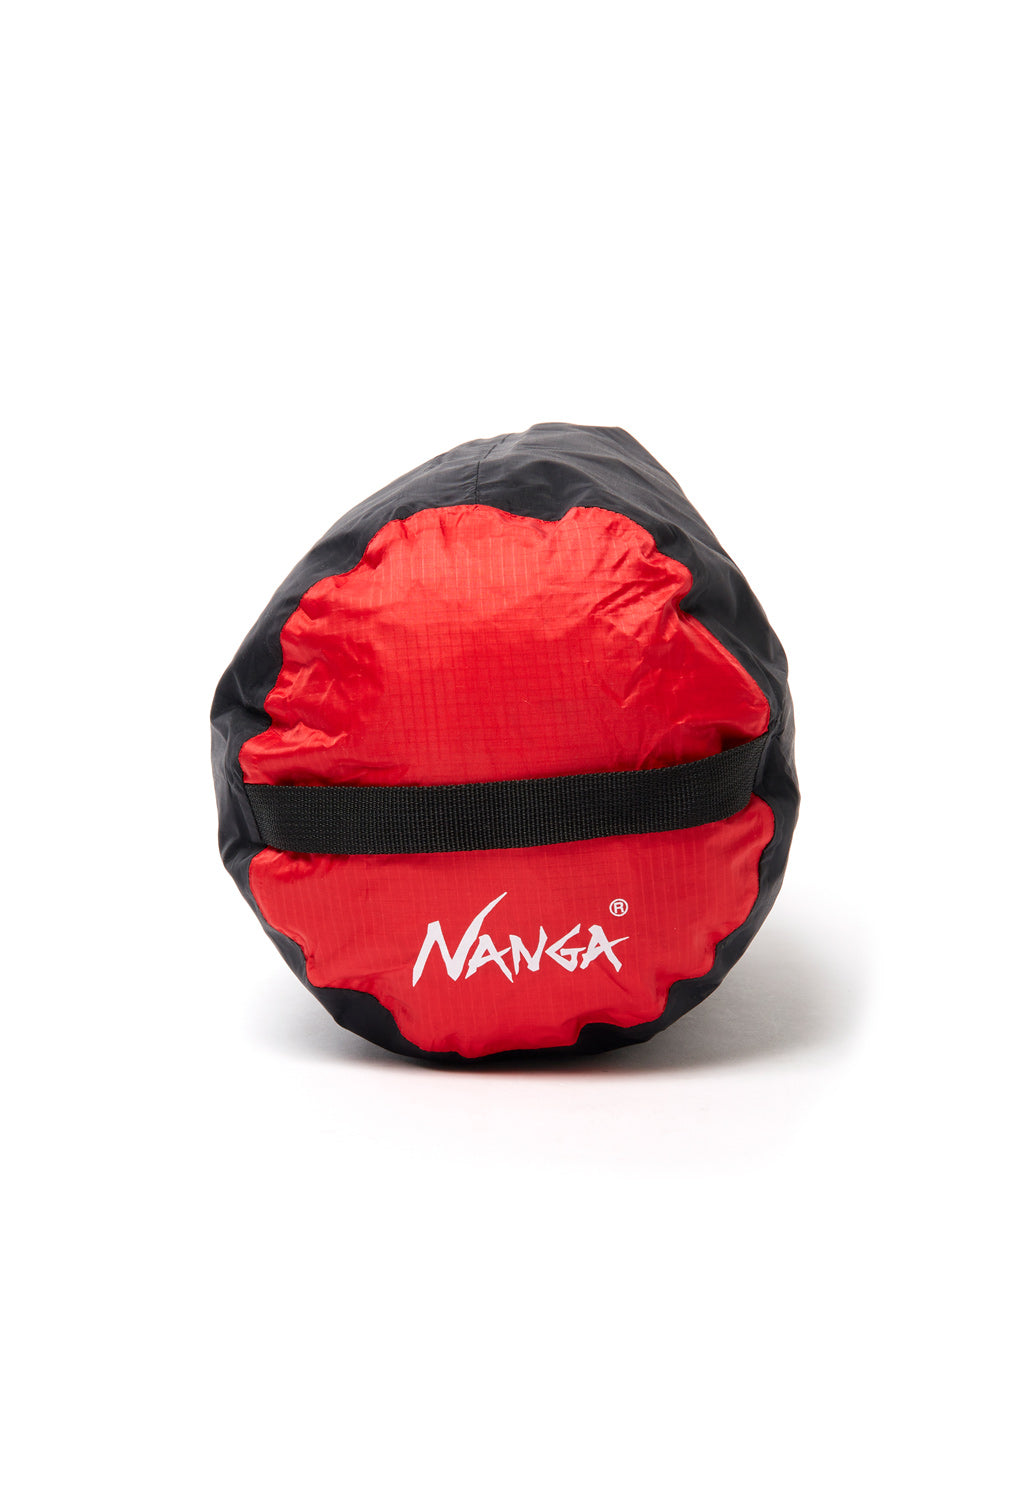 Nanga Compression Bag Medium - Black